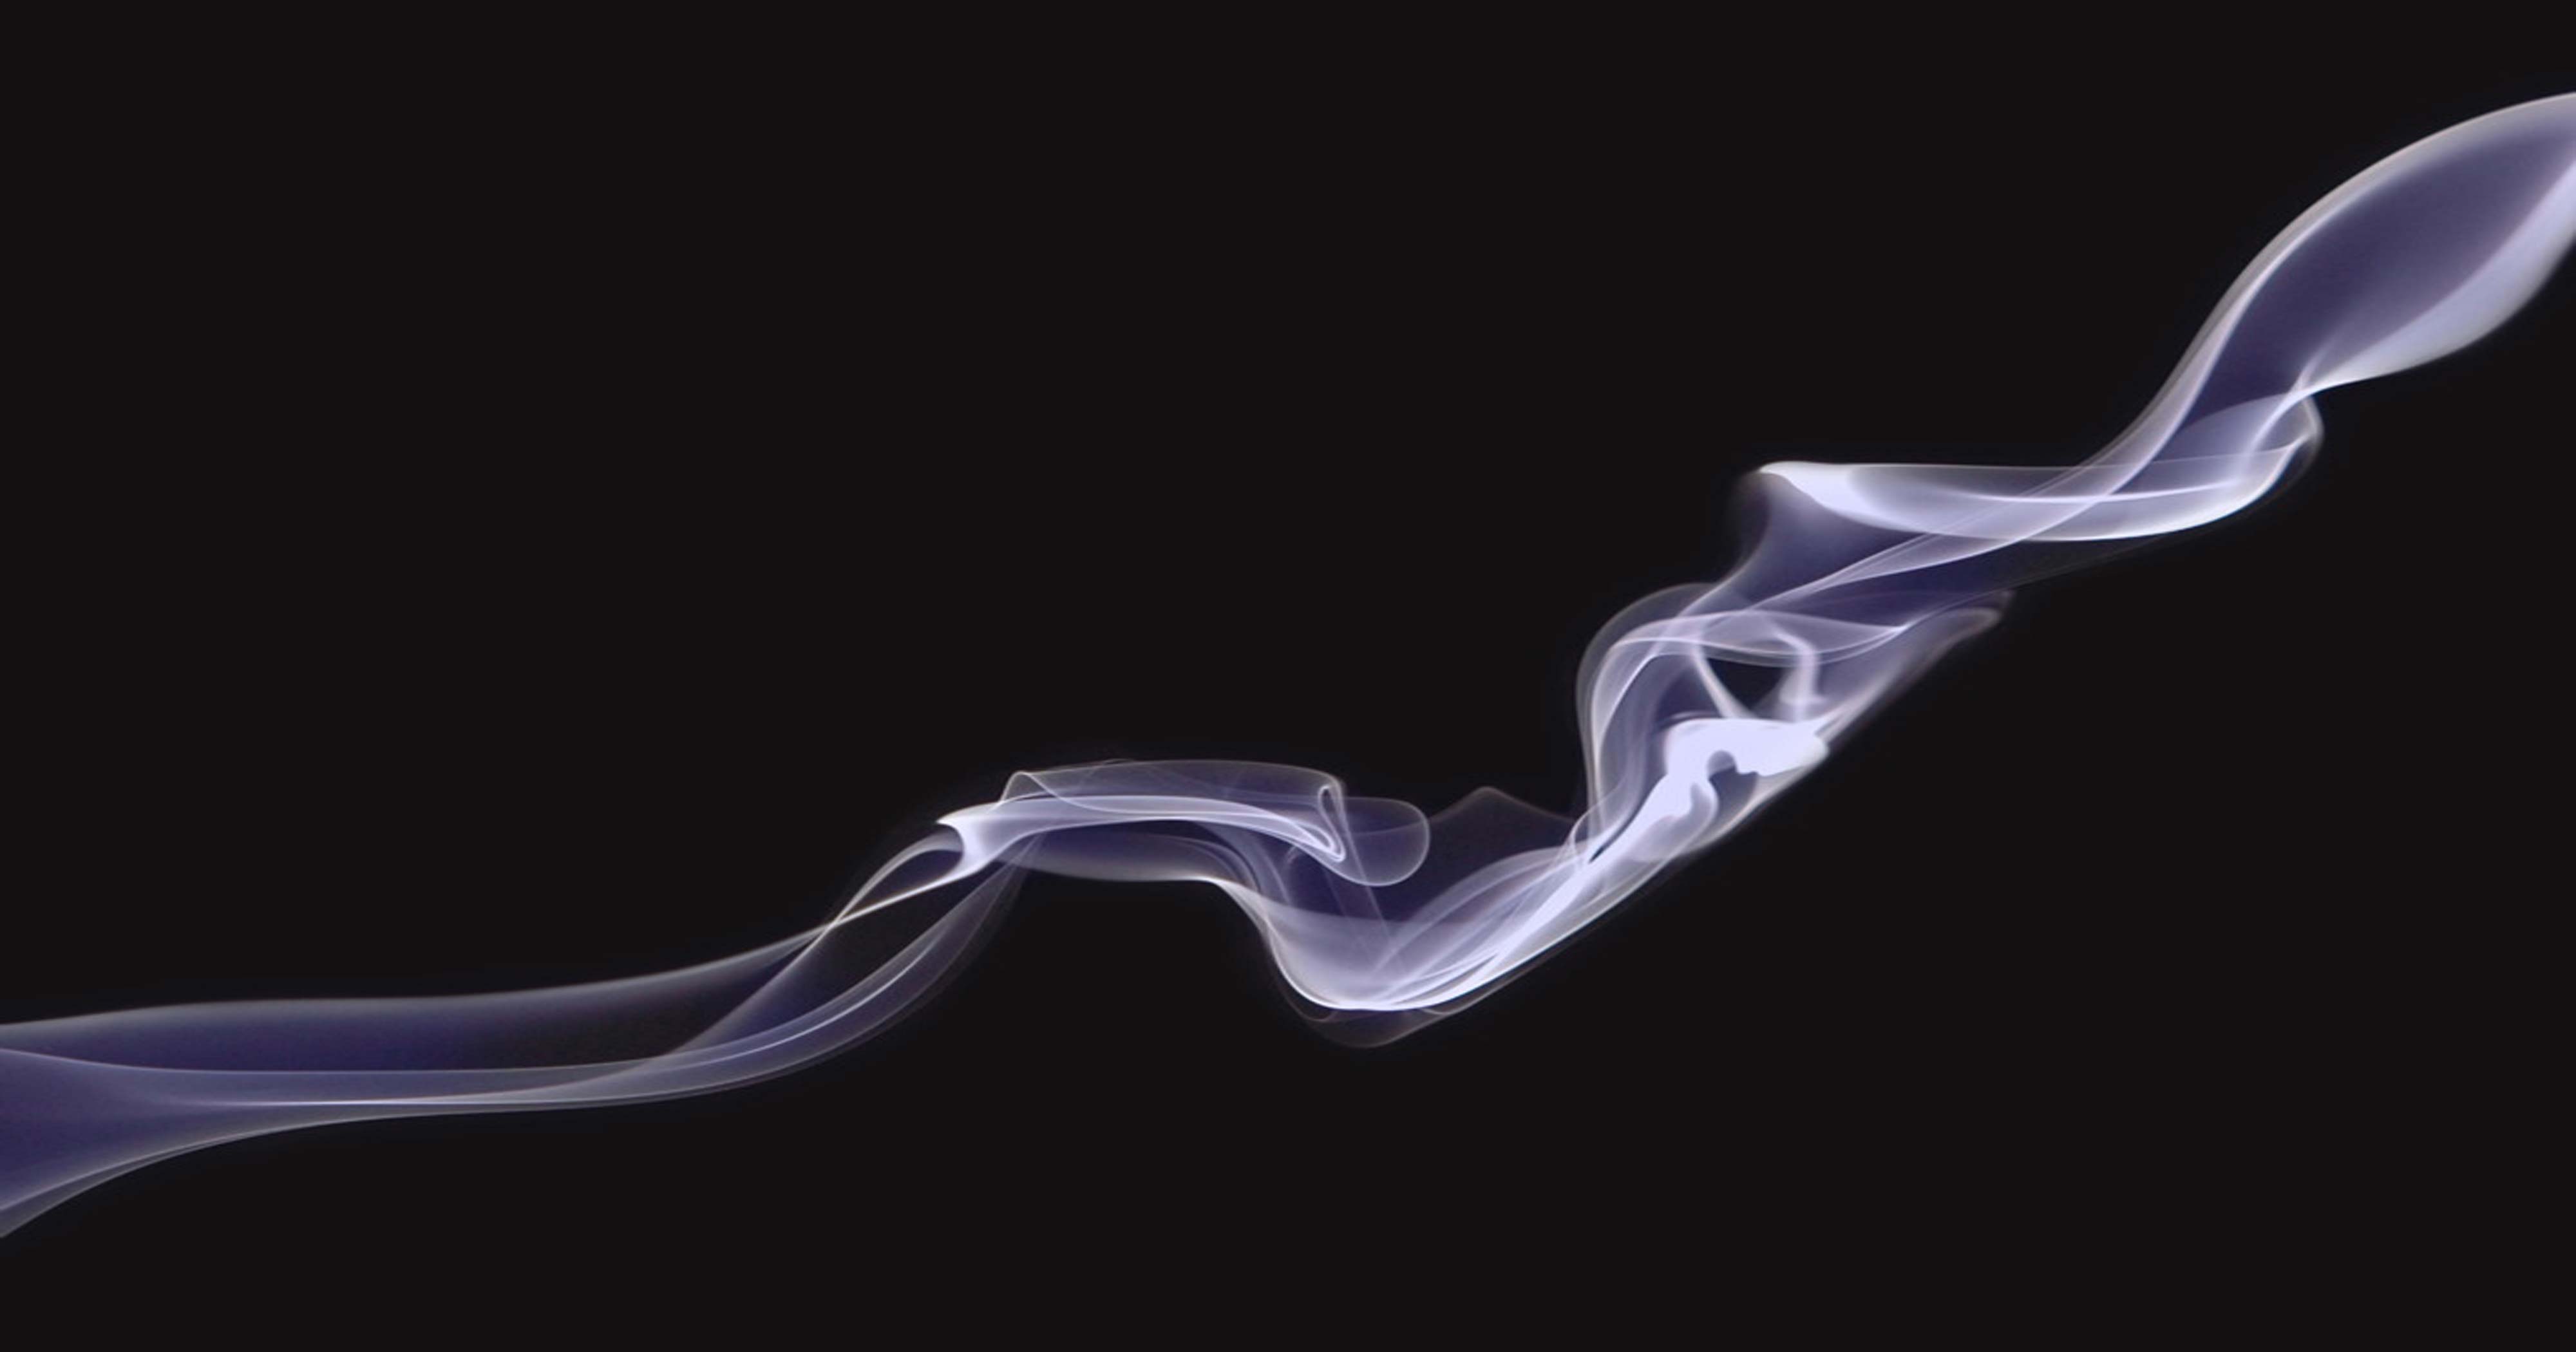 🔥 [42+] Smoking Weed Wallpapers HD | WallpaperSafari